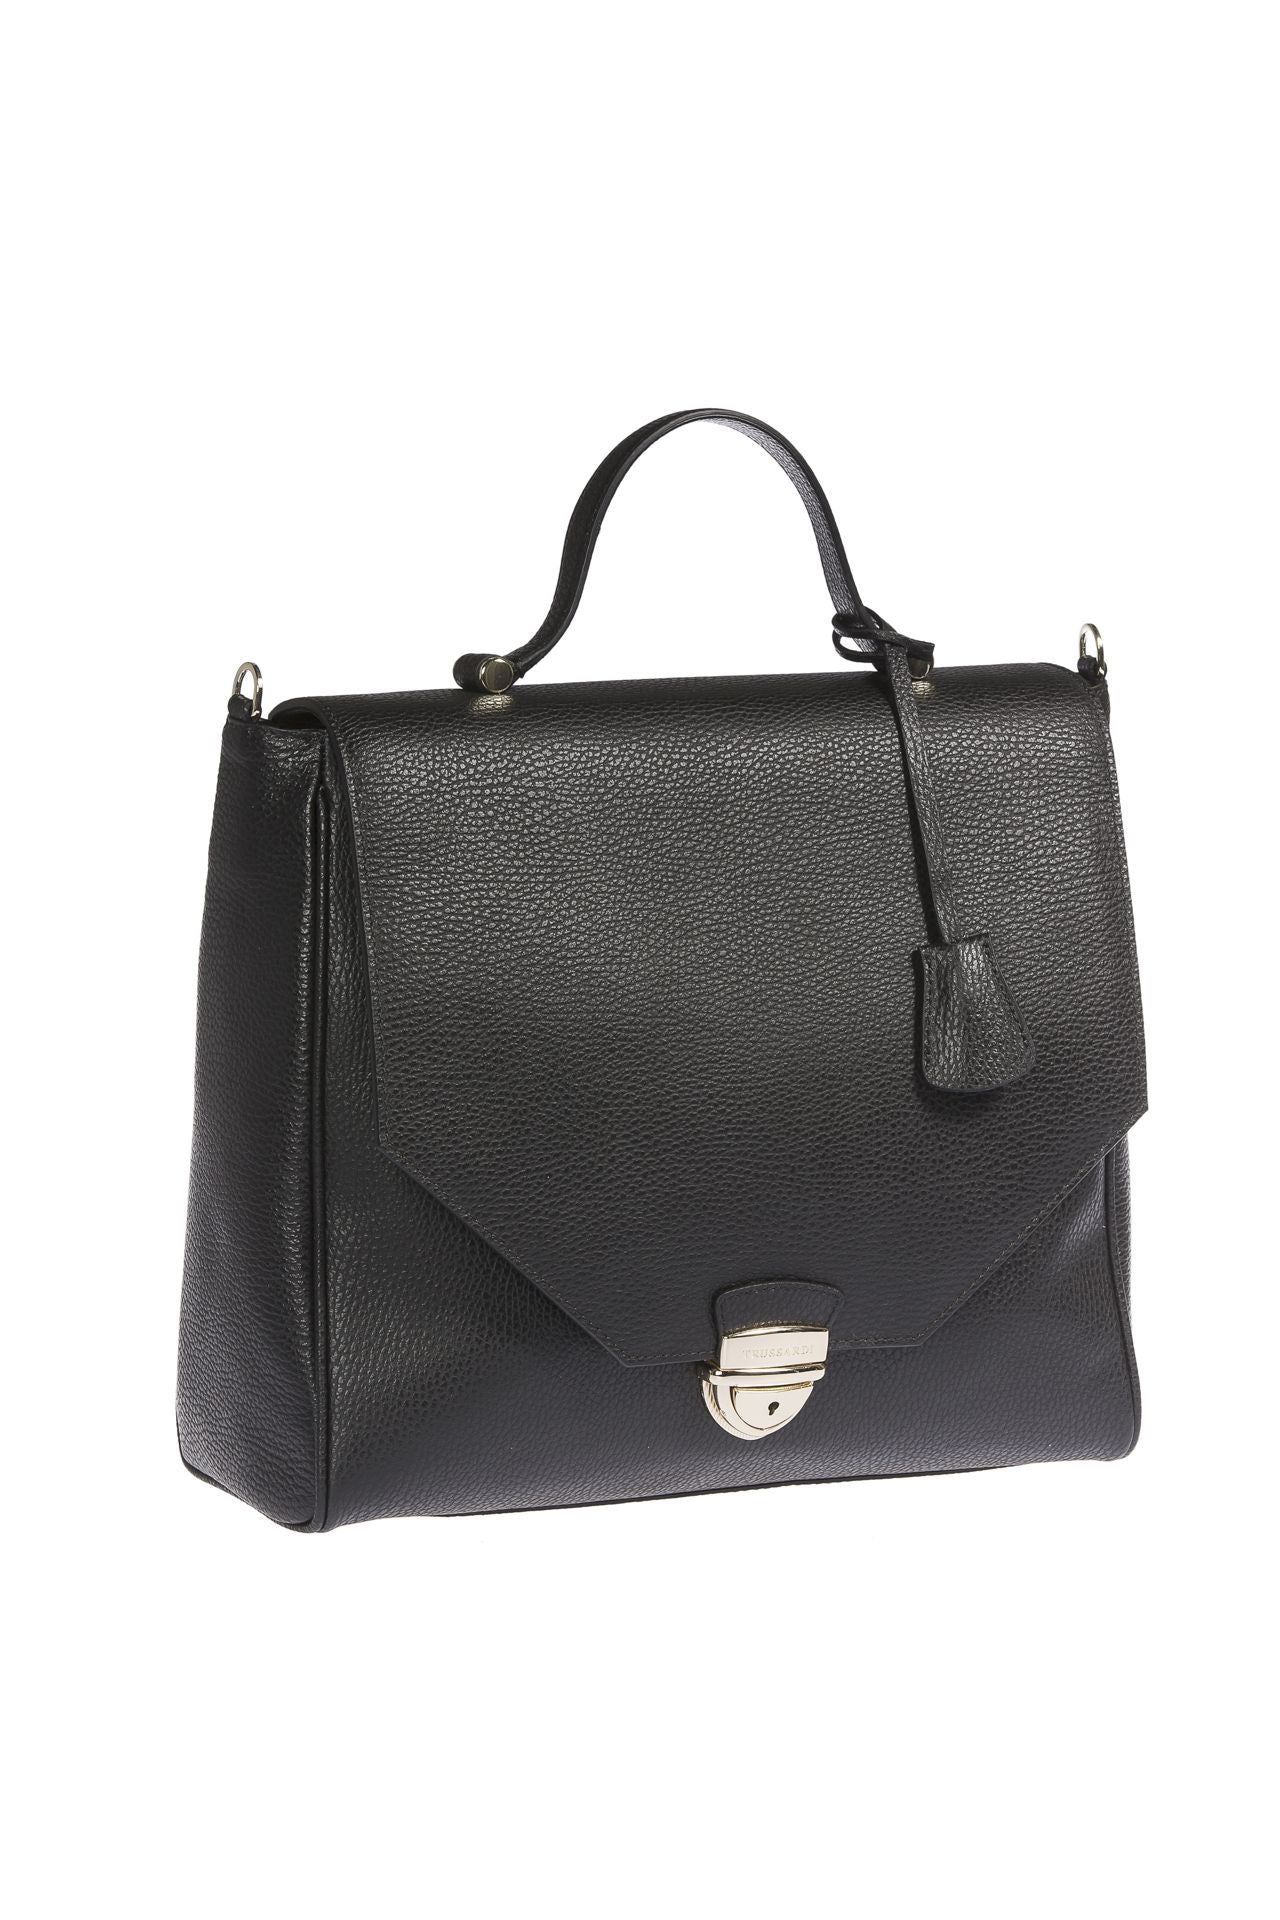 Fashionsarah.com Fashionsarah.com Trussardi Elegant Embossed Leather Handbag